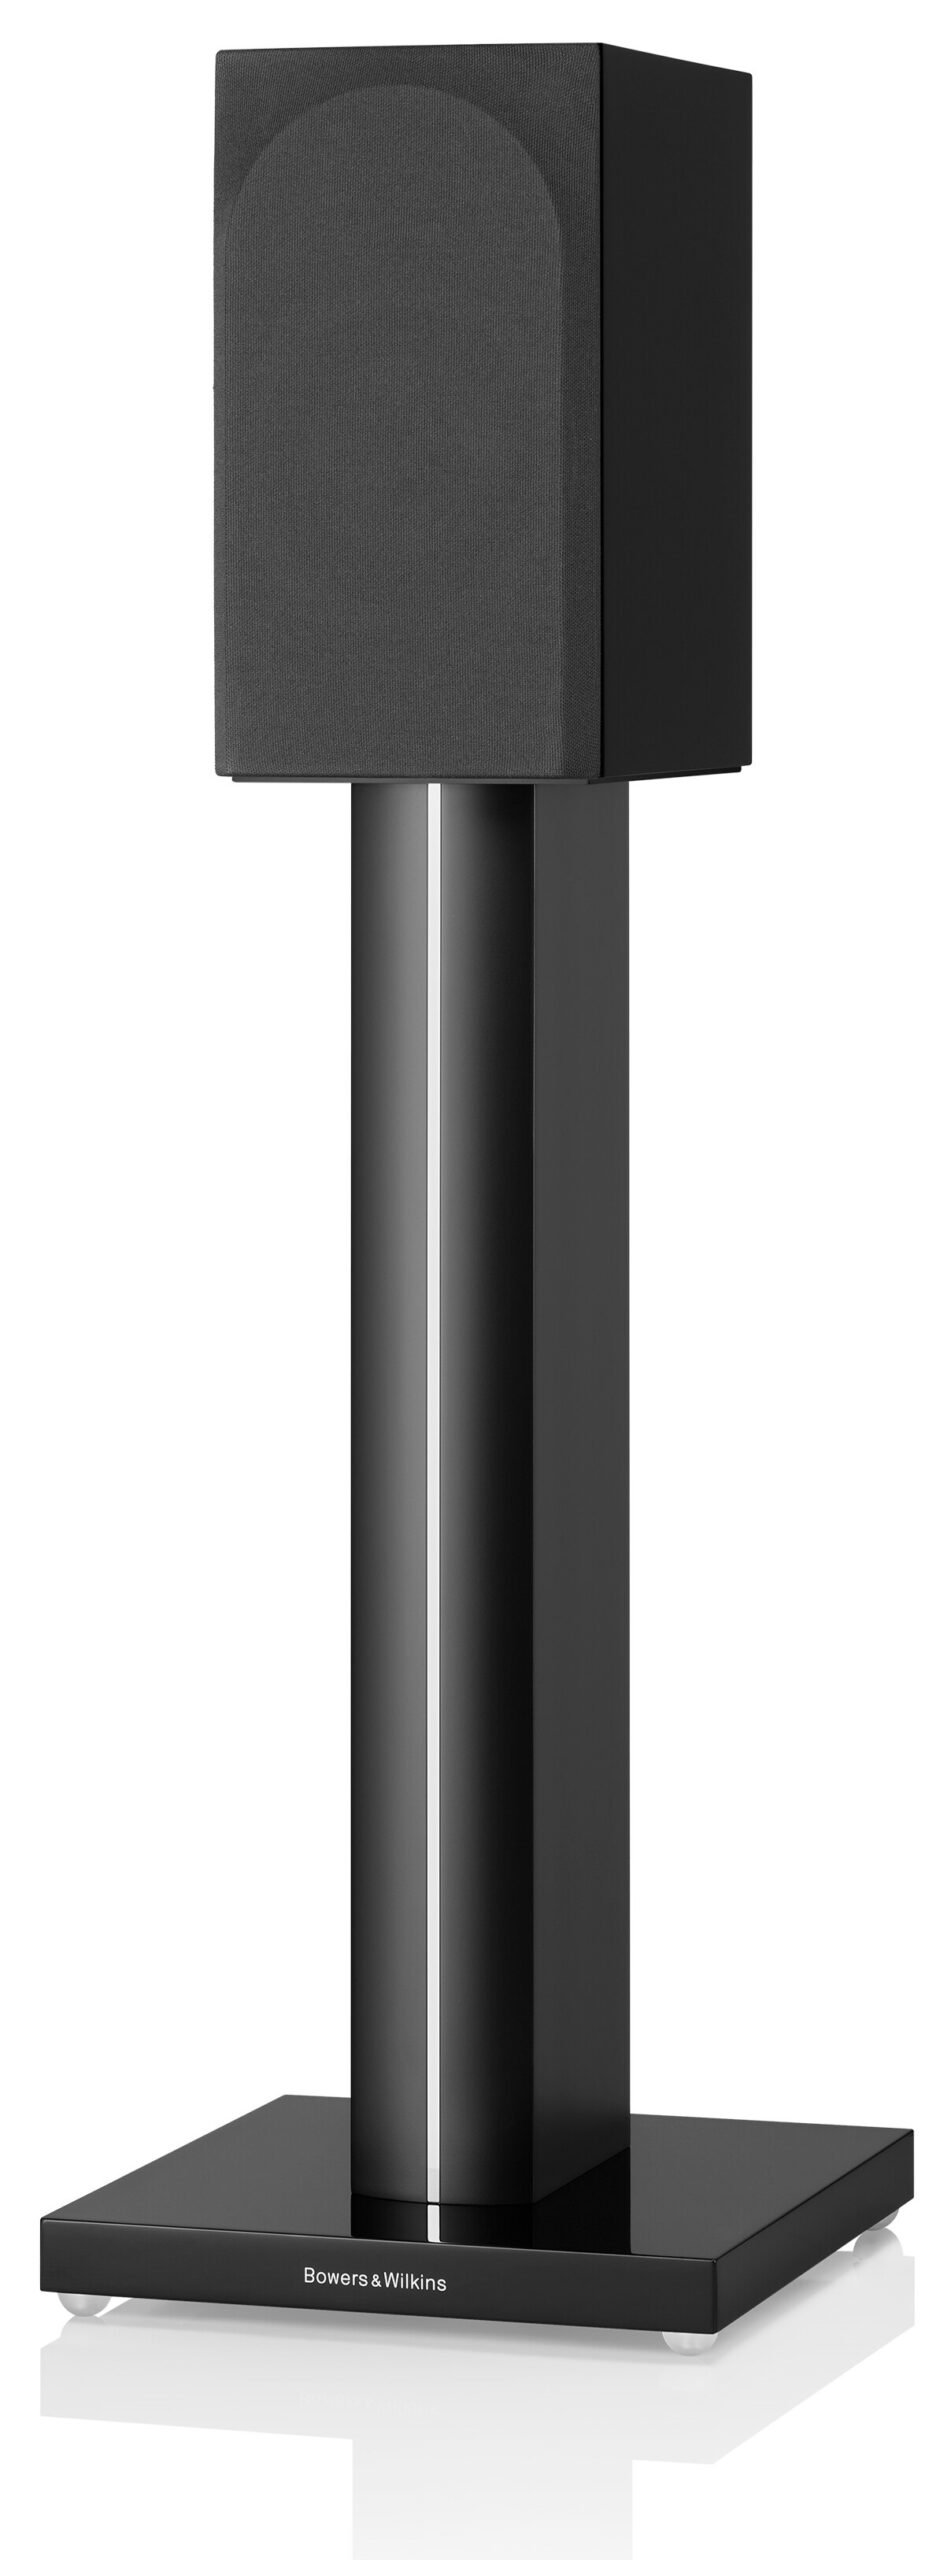 Bowers & Wilkins 707 S3 gloss black gallerij 115559